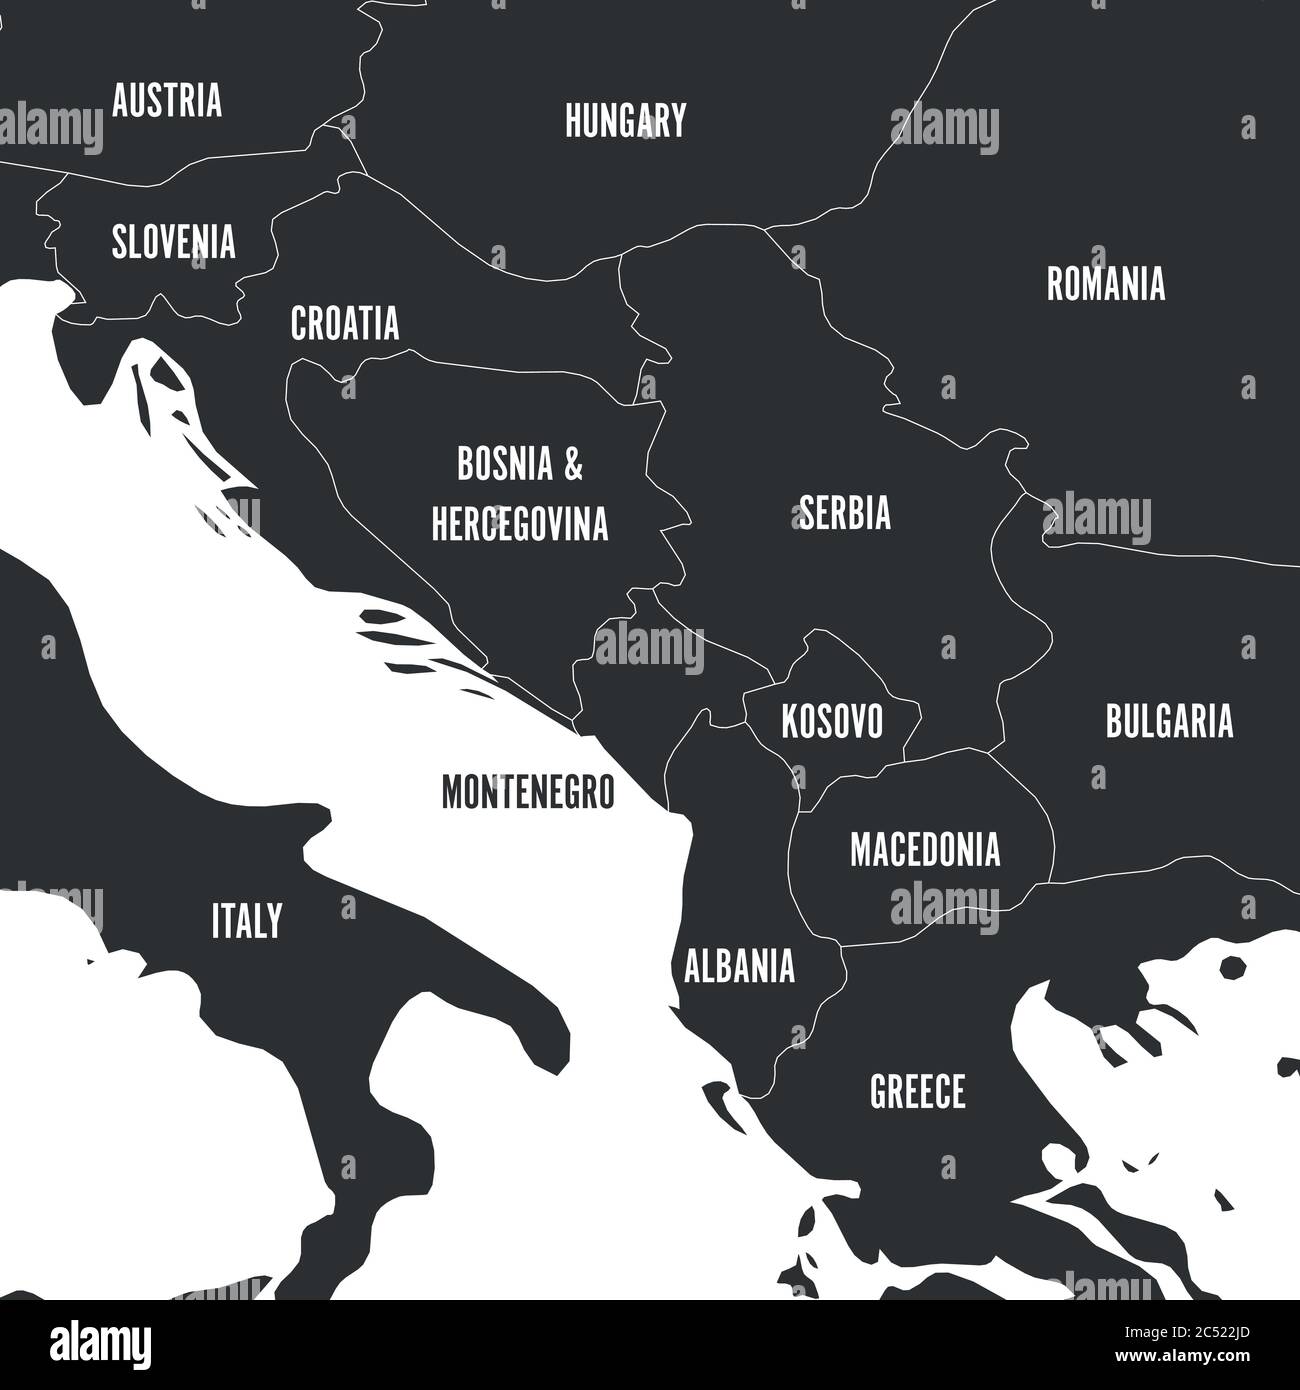 Politische Landkarte des Balkans - Staaten der Balkanhalbinsel in grau. Vektorgrafik. Stock Vektor